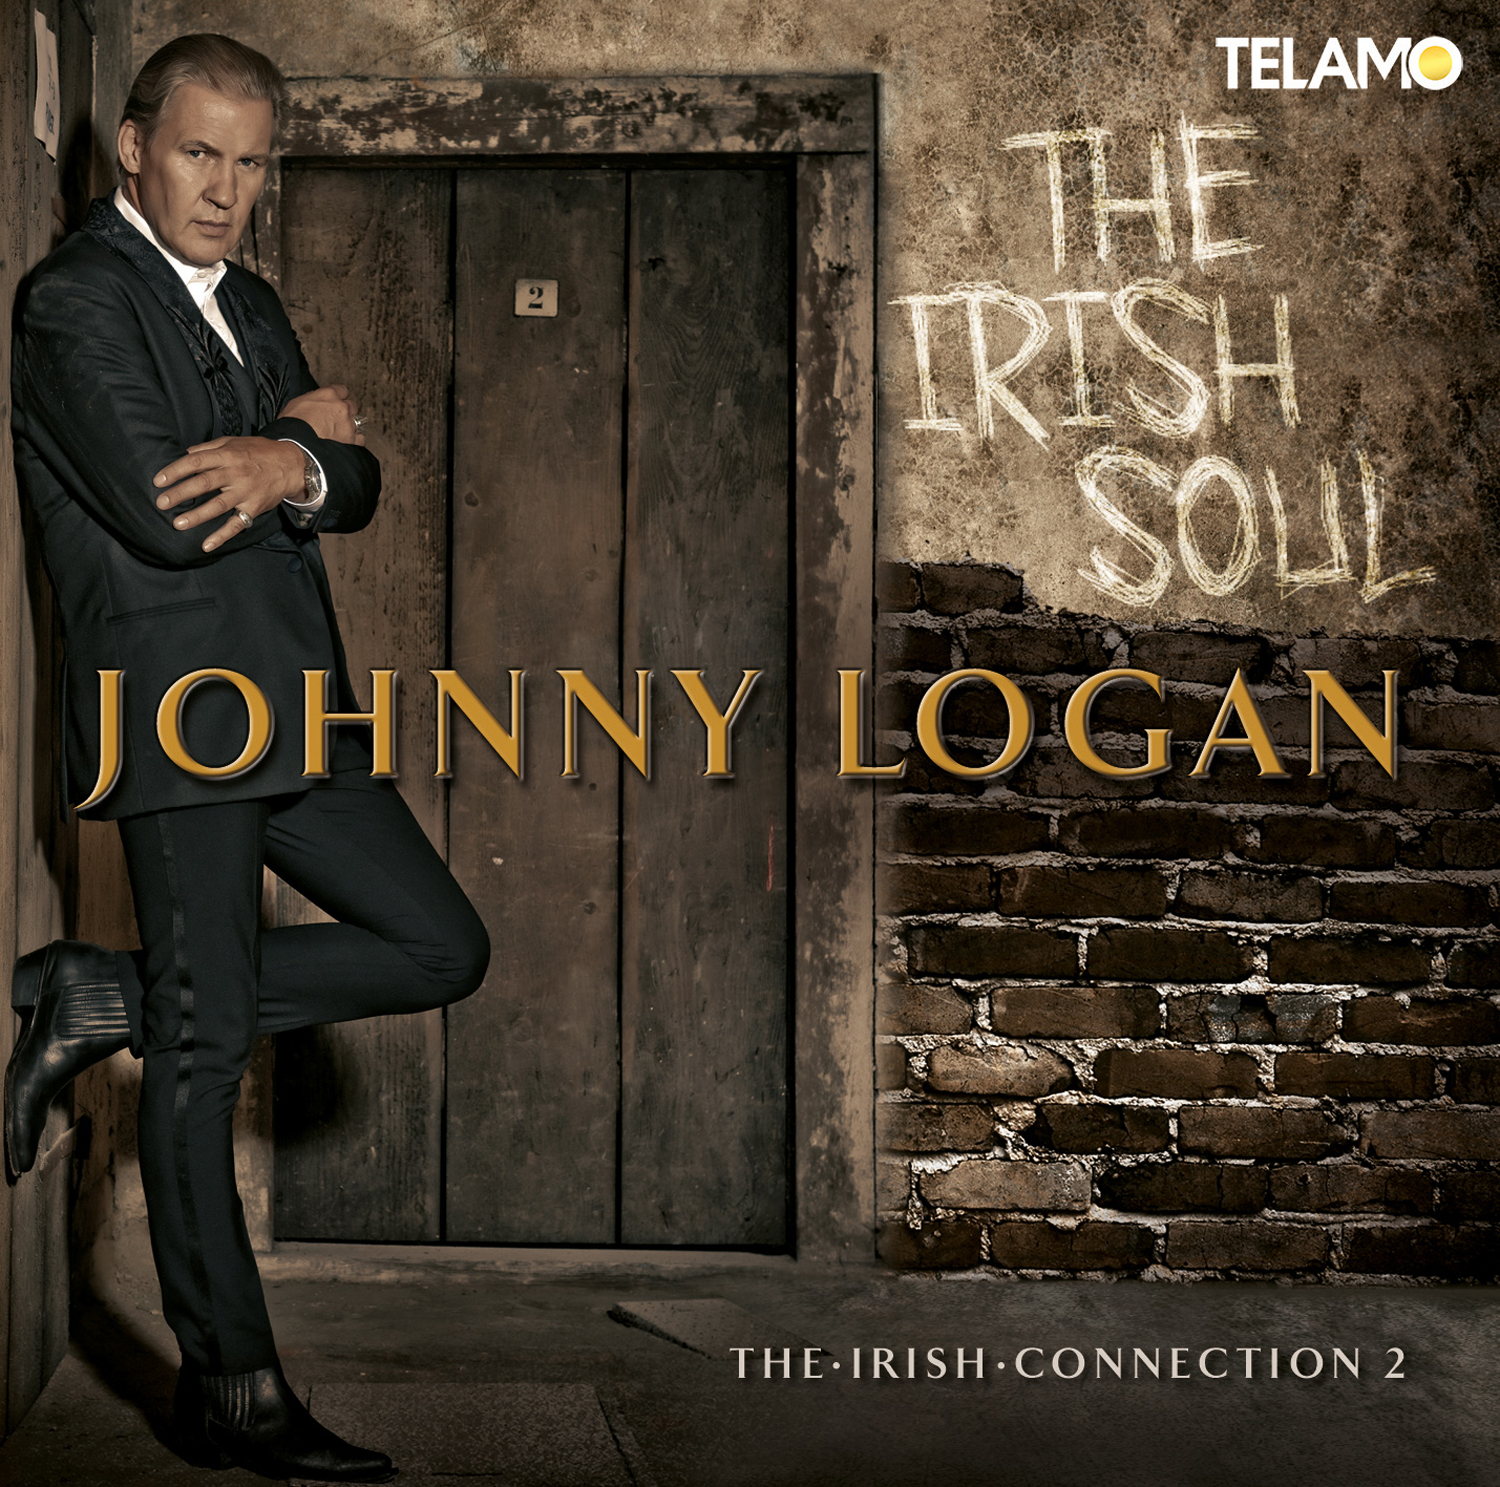 Johnny Logan – "The Irish Soul - The Irish Connection 2“